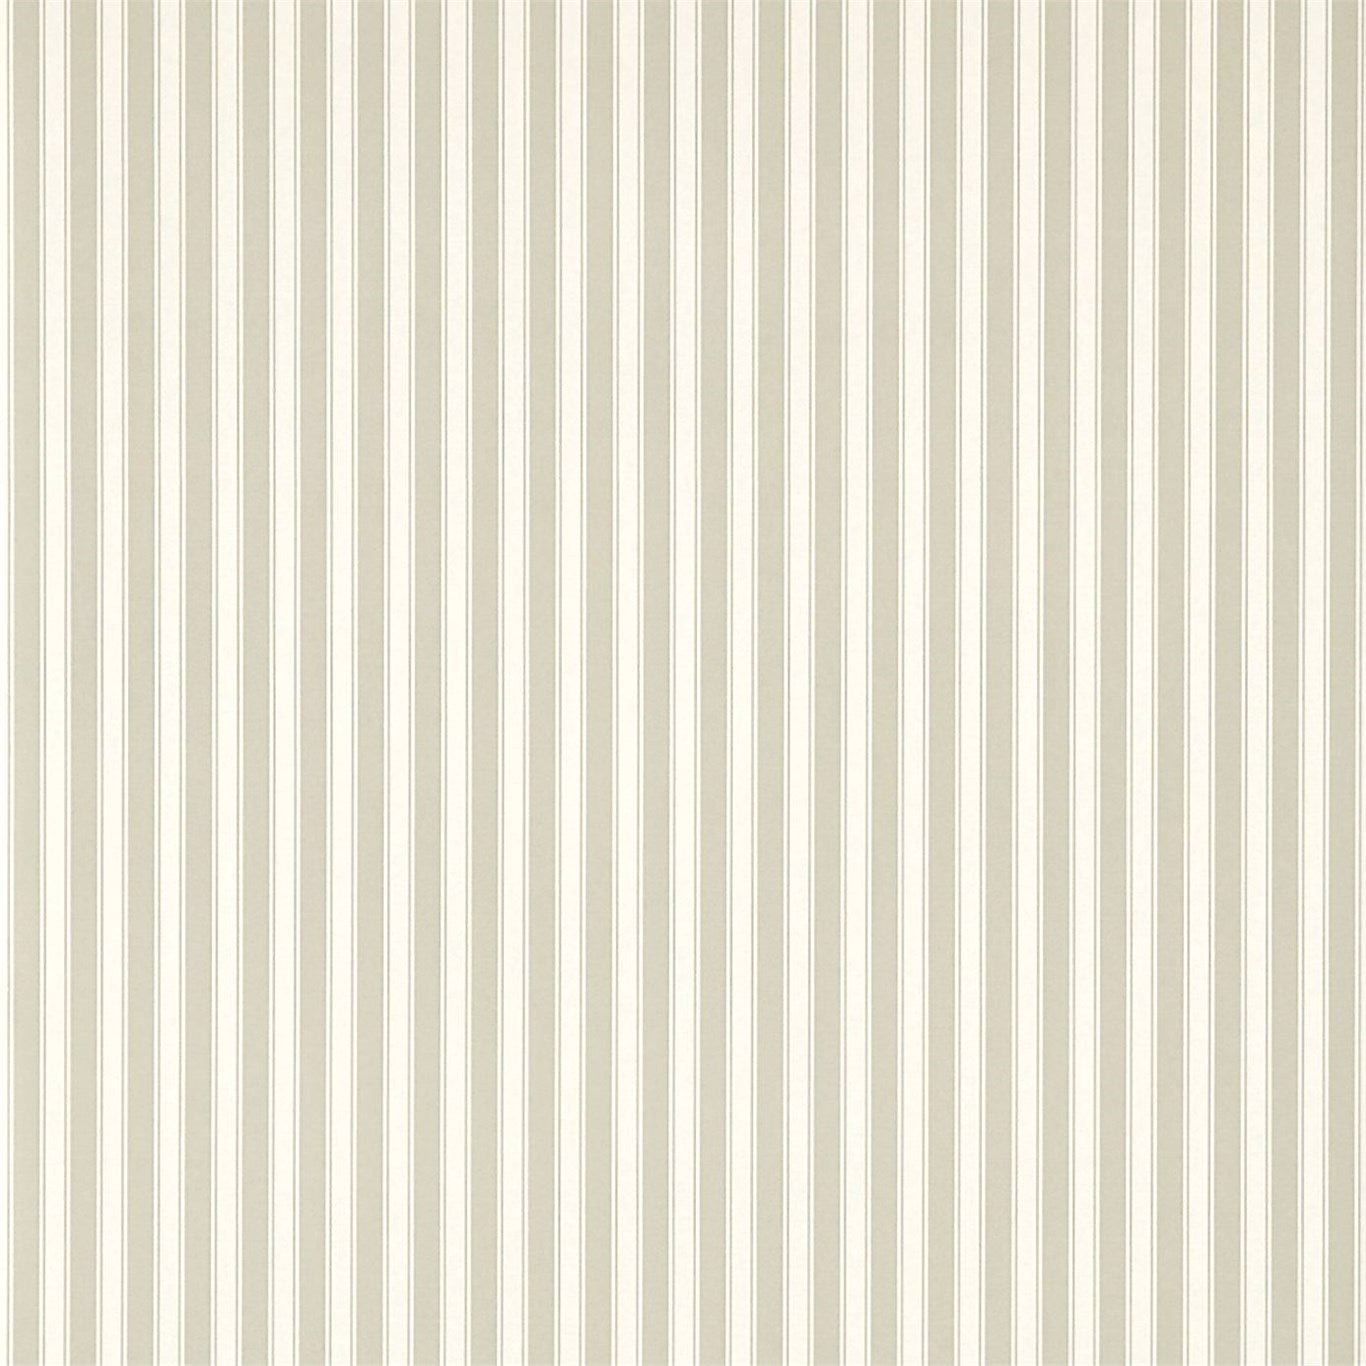 New Tiger Stripe Wallpaper - Linen/Calico - DCAVTP107 - Sanderson - One Sixty - Morris Wallpaper